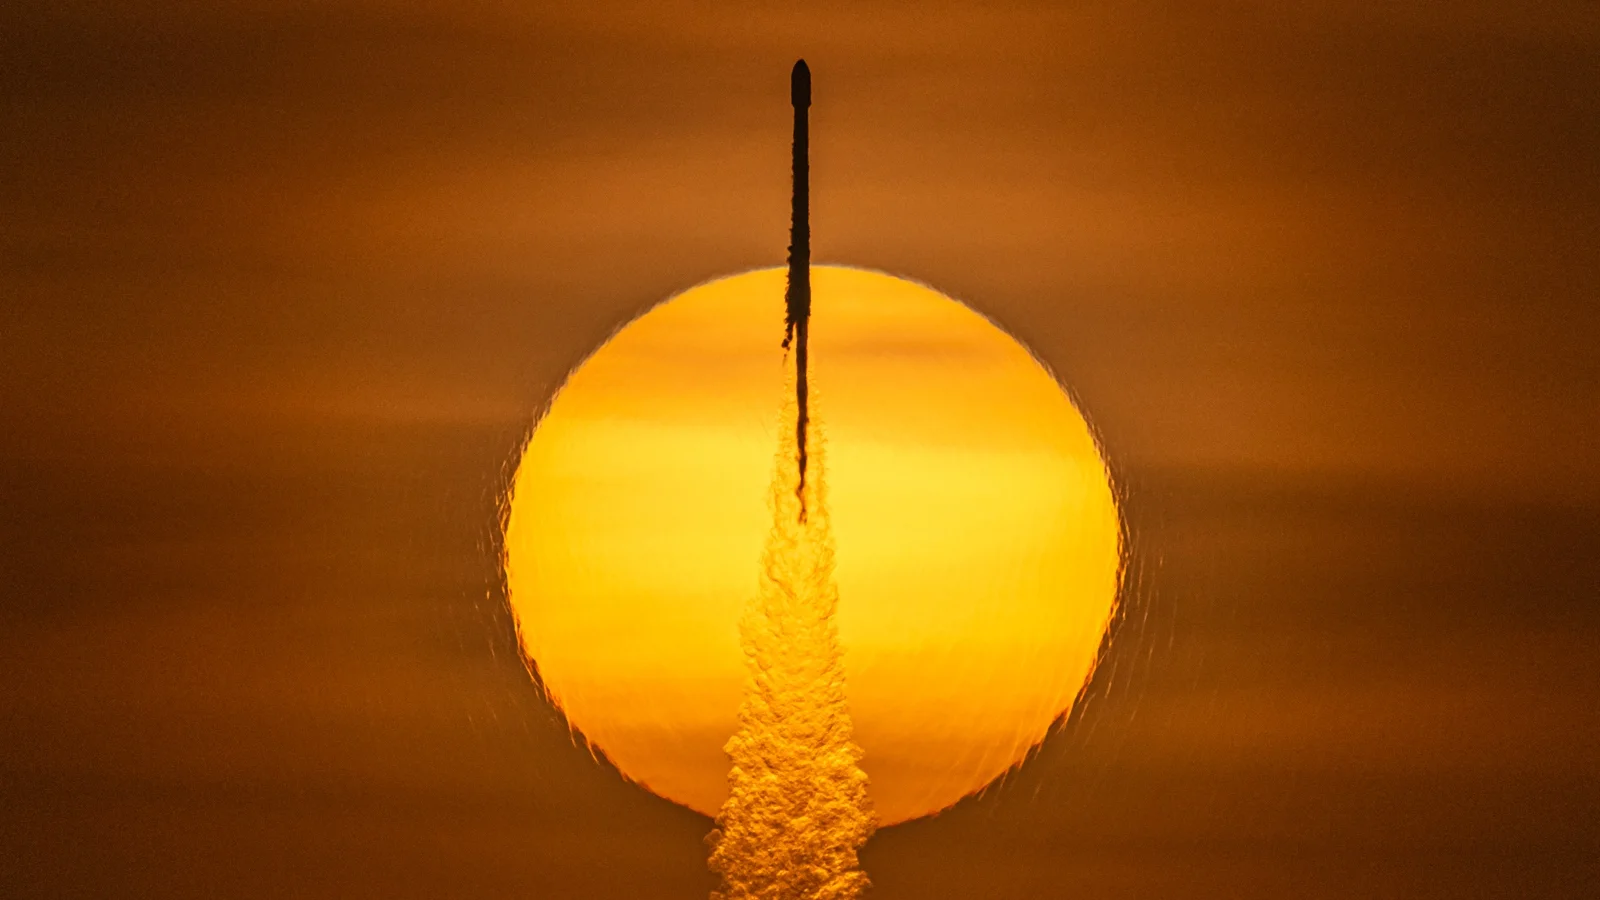 Это надо видеть: ракета Falcon 9 летит на фоне Солнца - фото 1